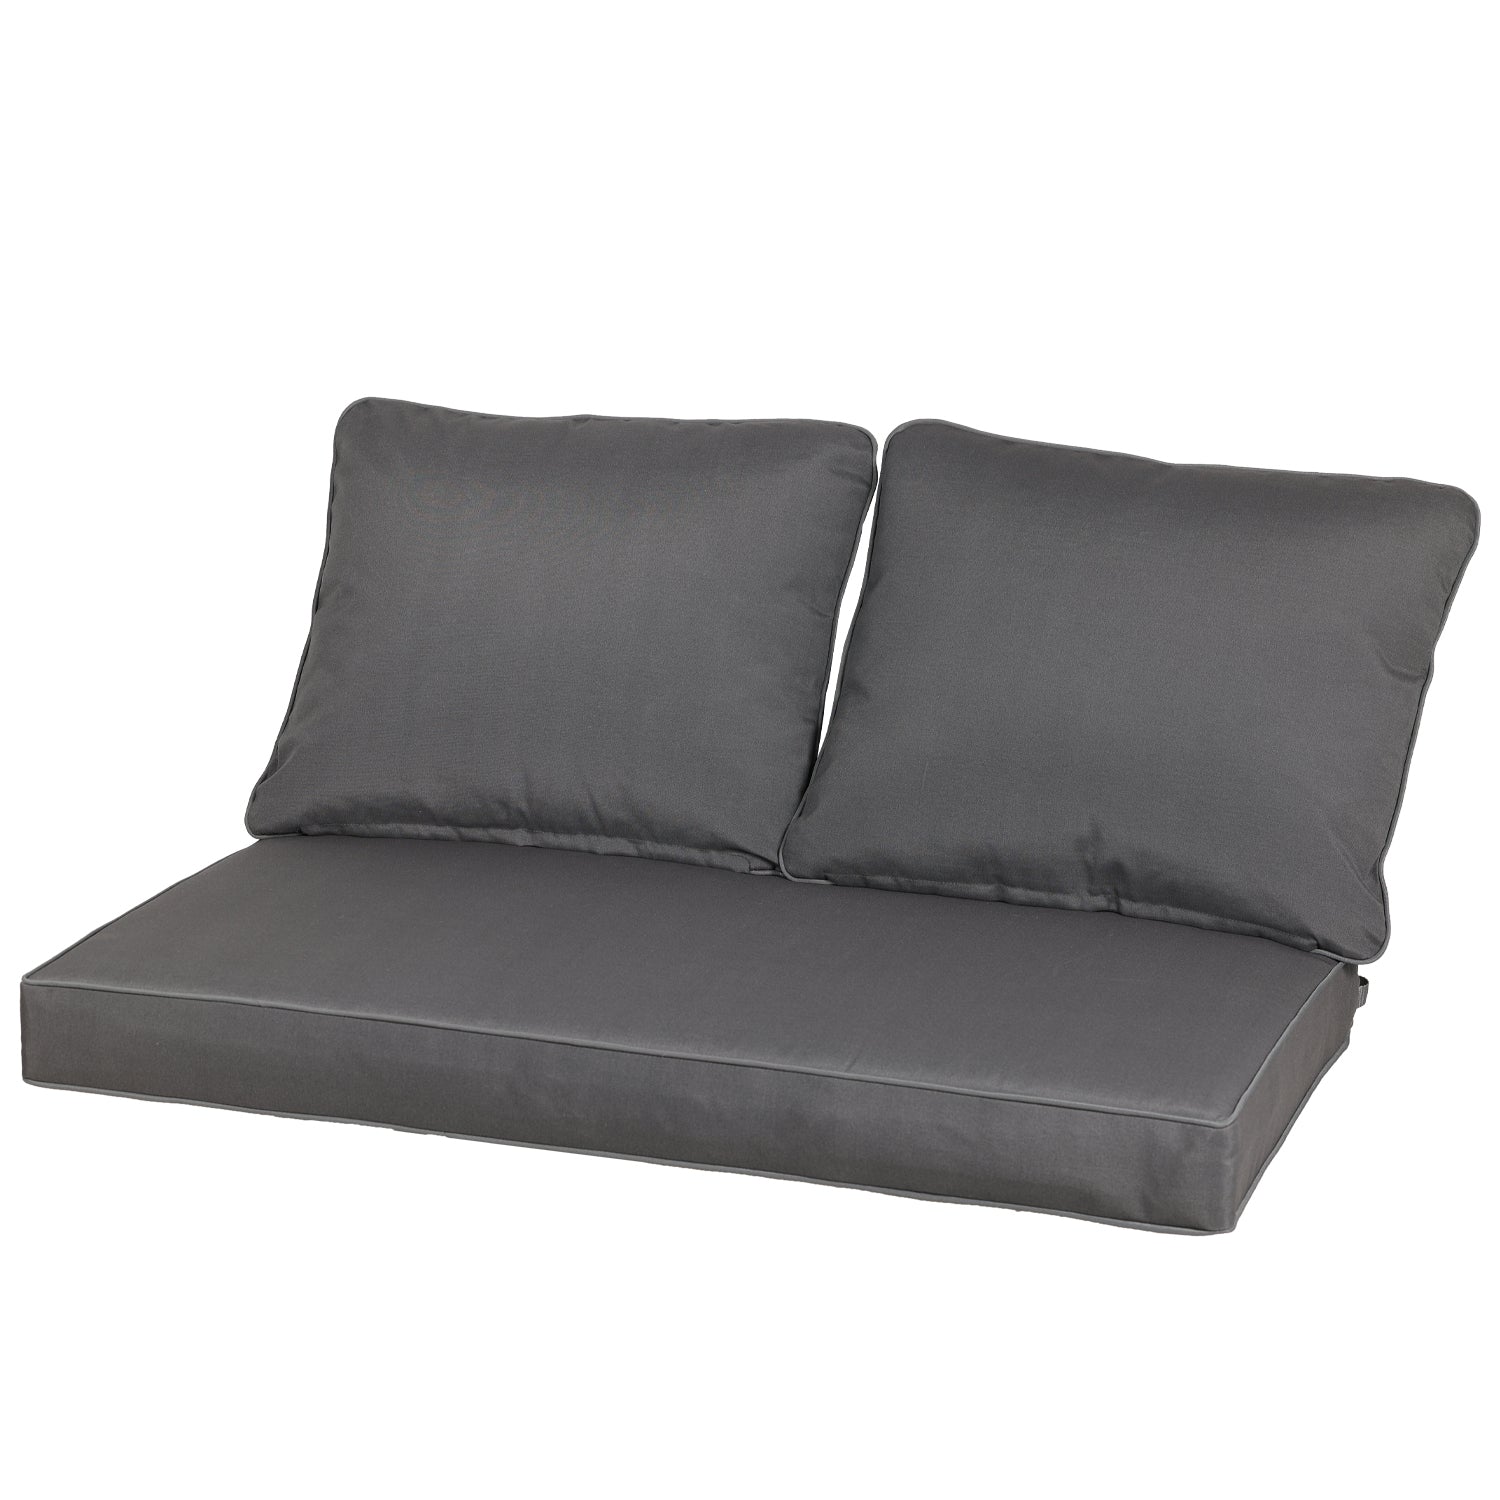 46.5"x24.4"x3.9" Loveseat Cushions Set, Deep Seating Bench Cushions with Dust Jacket  - 3 Piece Set CUSHION Aoodor LLC Charcoal  